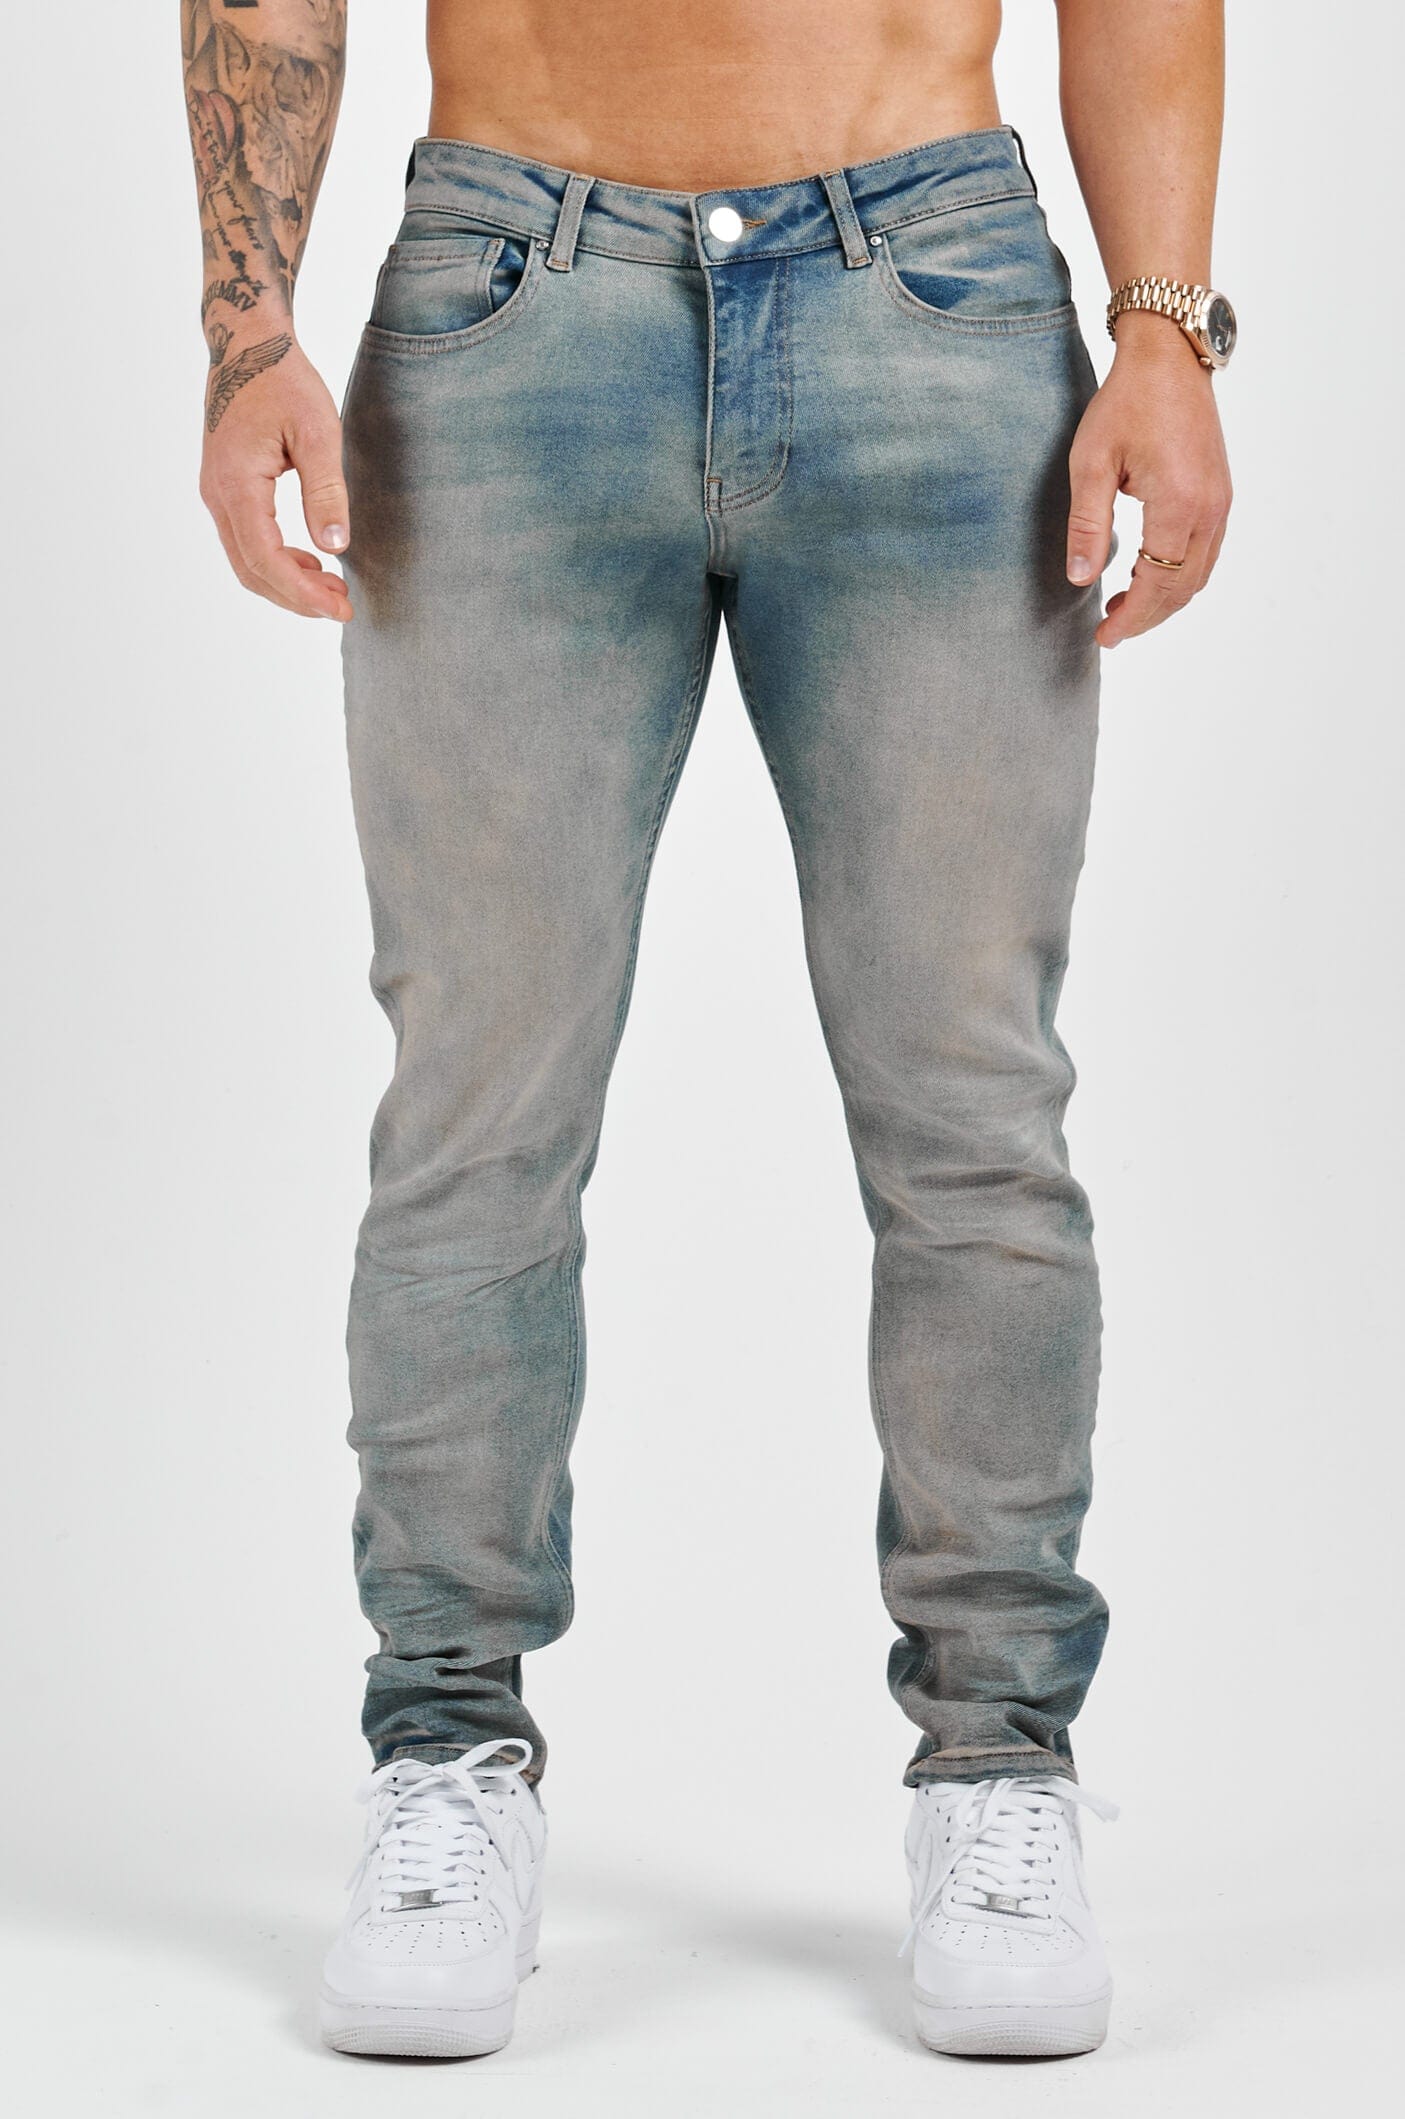 Legend London Jeans - slim 2.0 SLIM FIT JEANS 2.0 - STONE WASHED